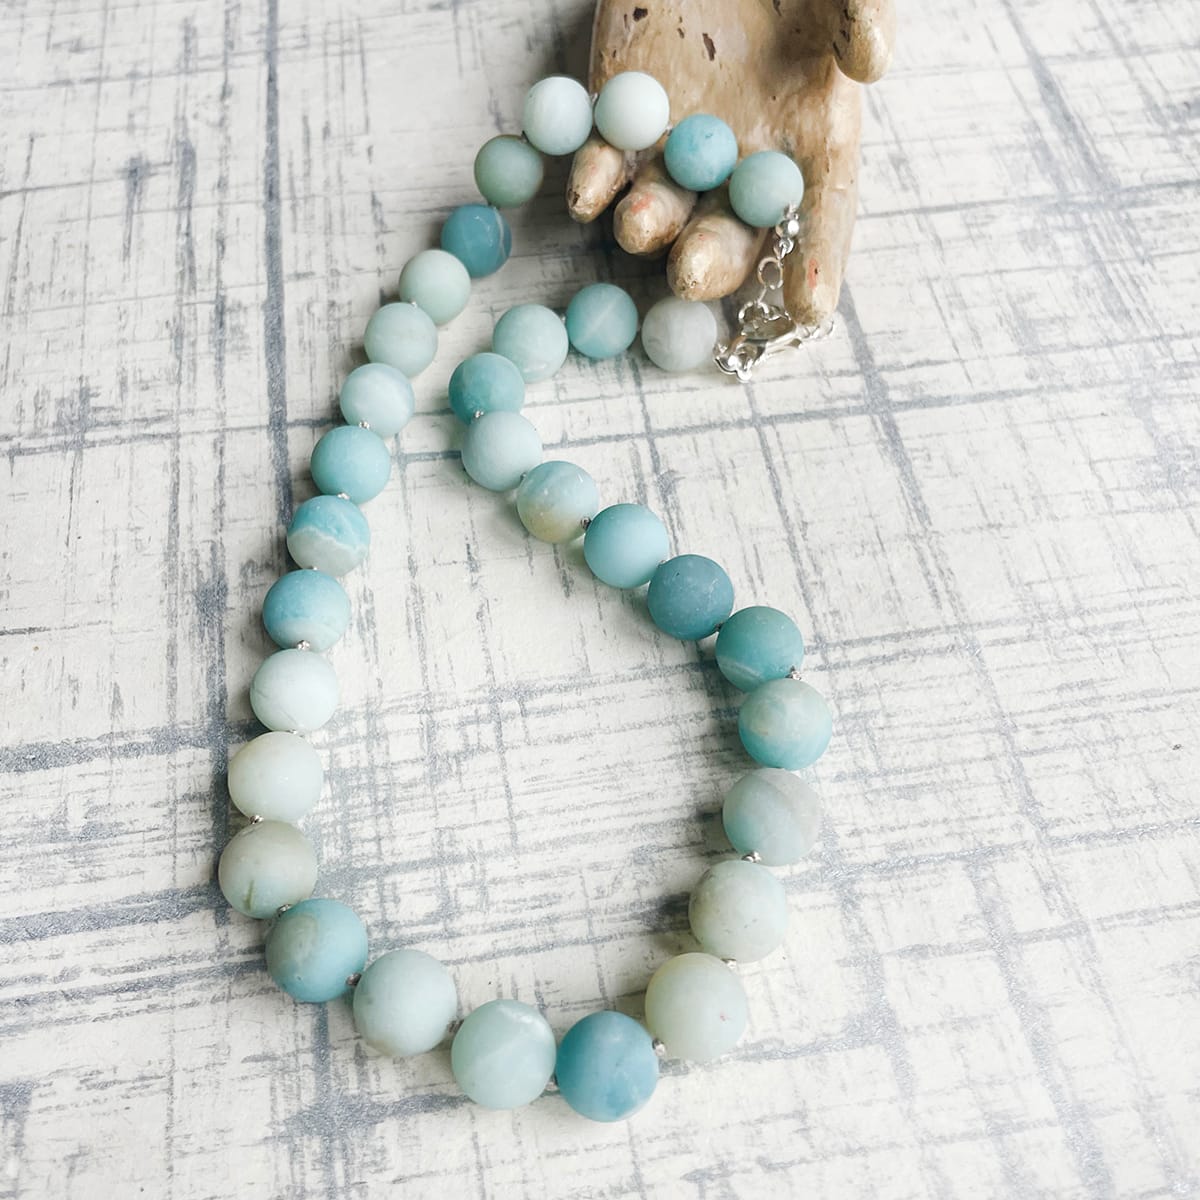 seaside necklace by Kayte Price 